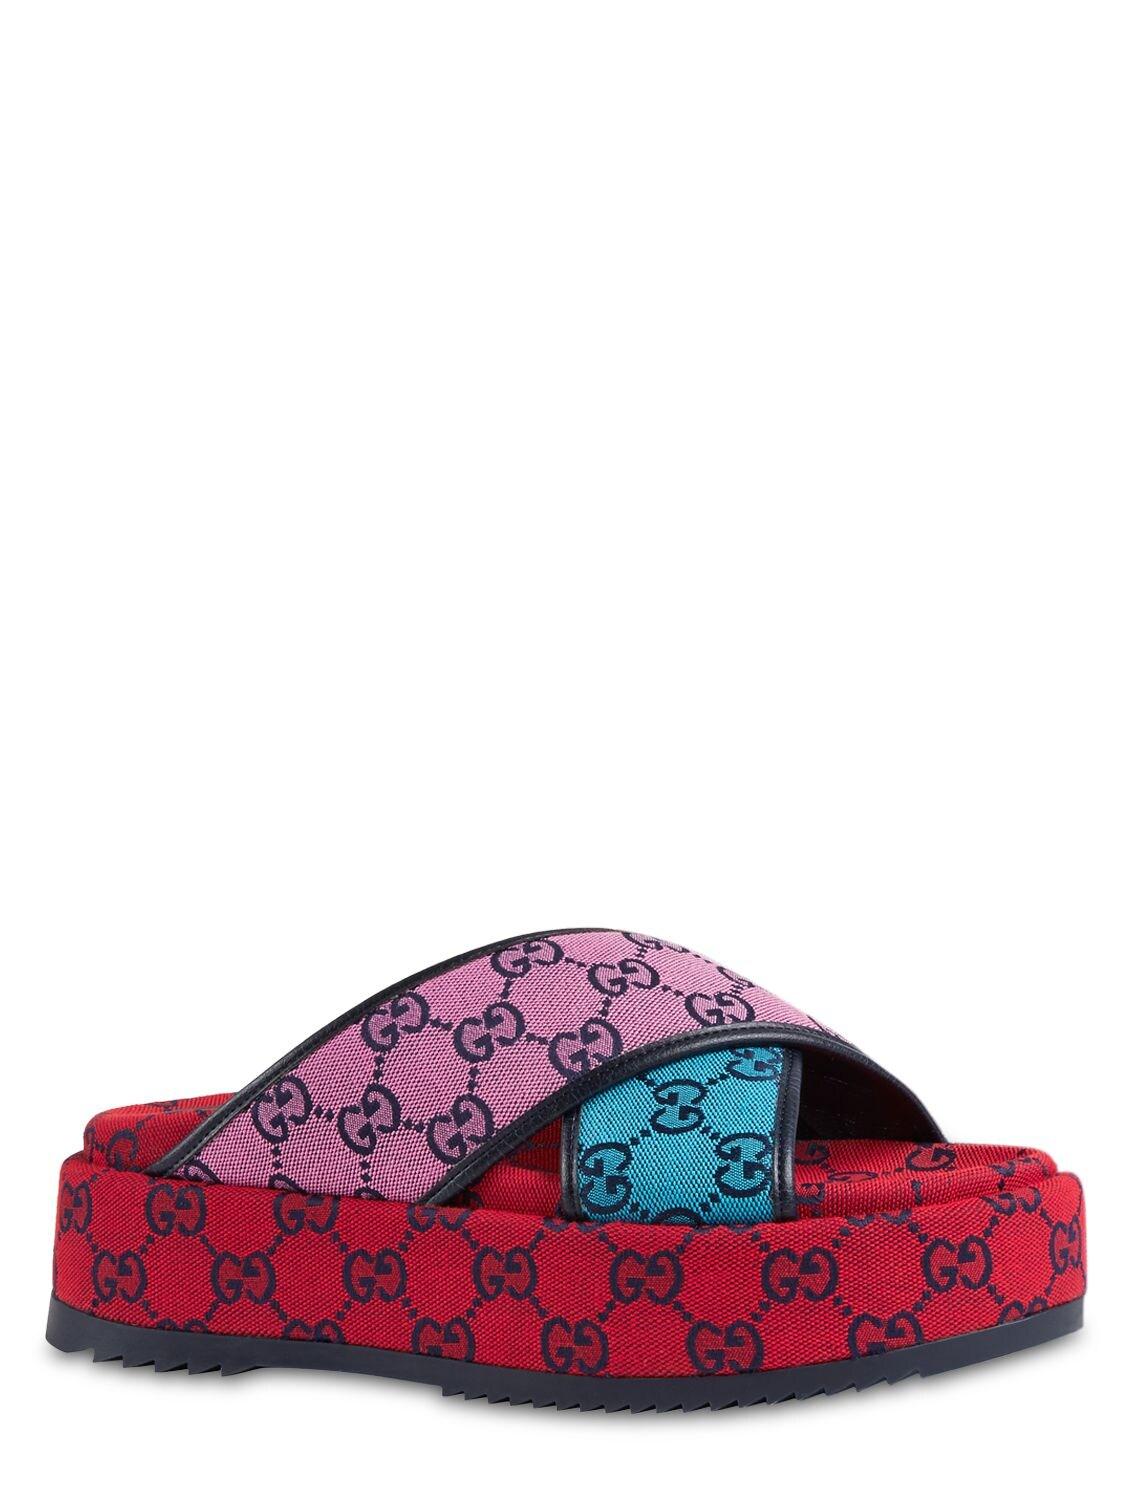 Gucci 55mm Gg Multicolor Platform Sandals in Pink | Lyst